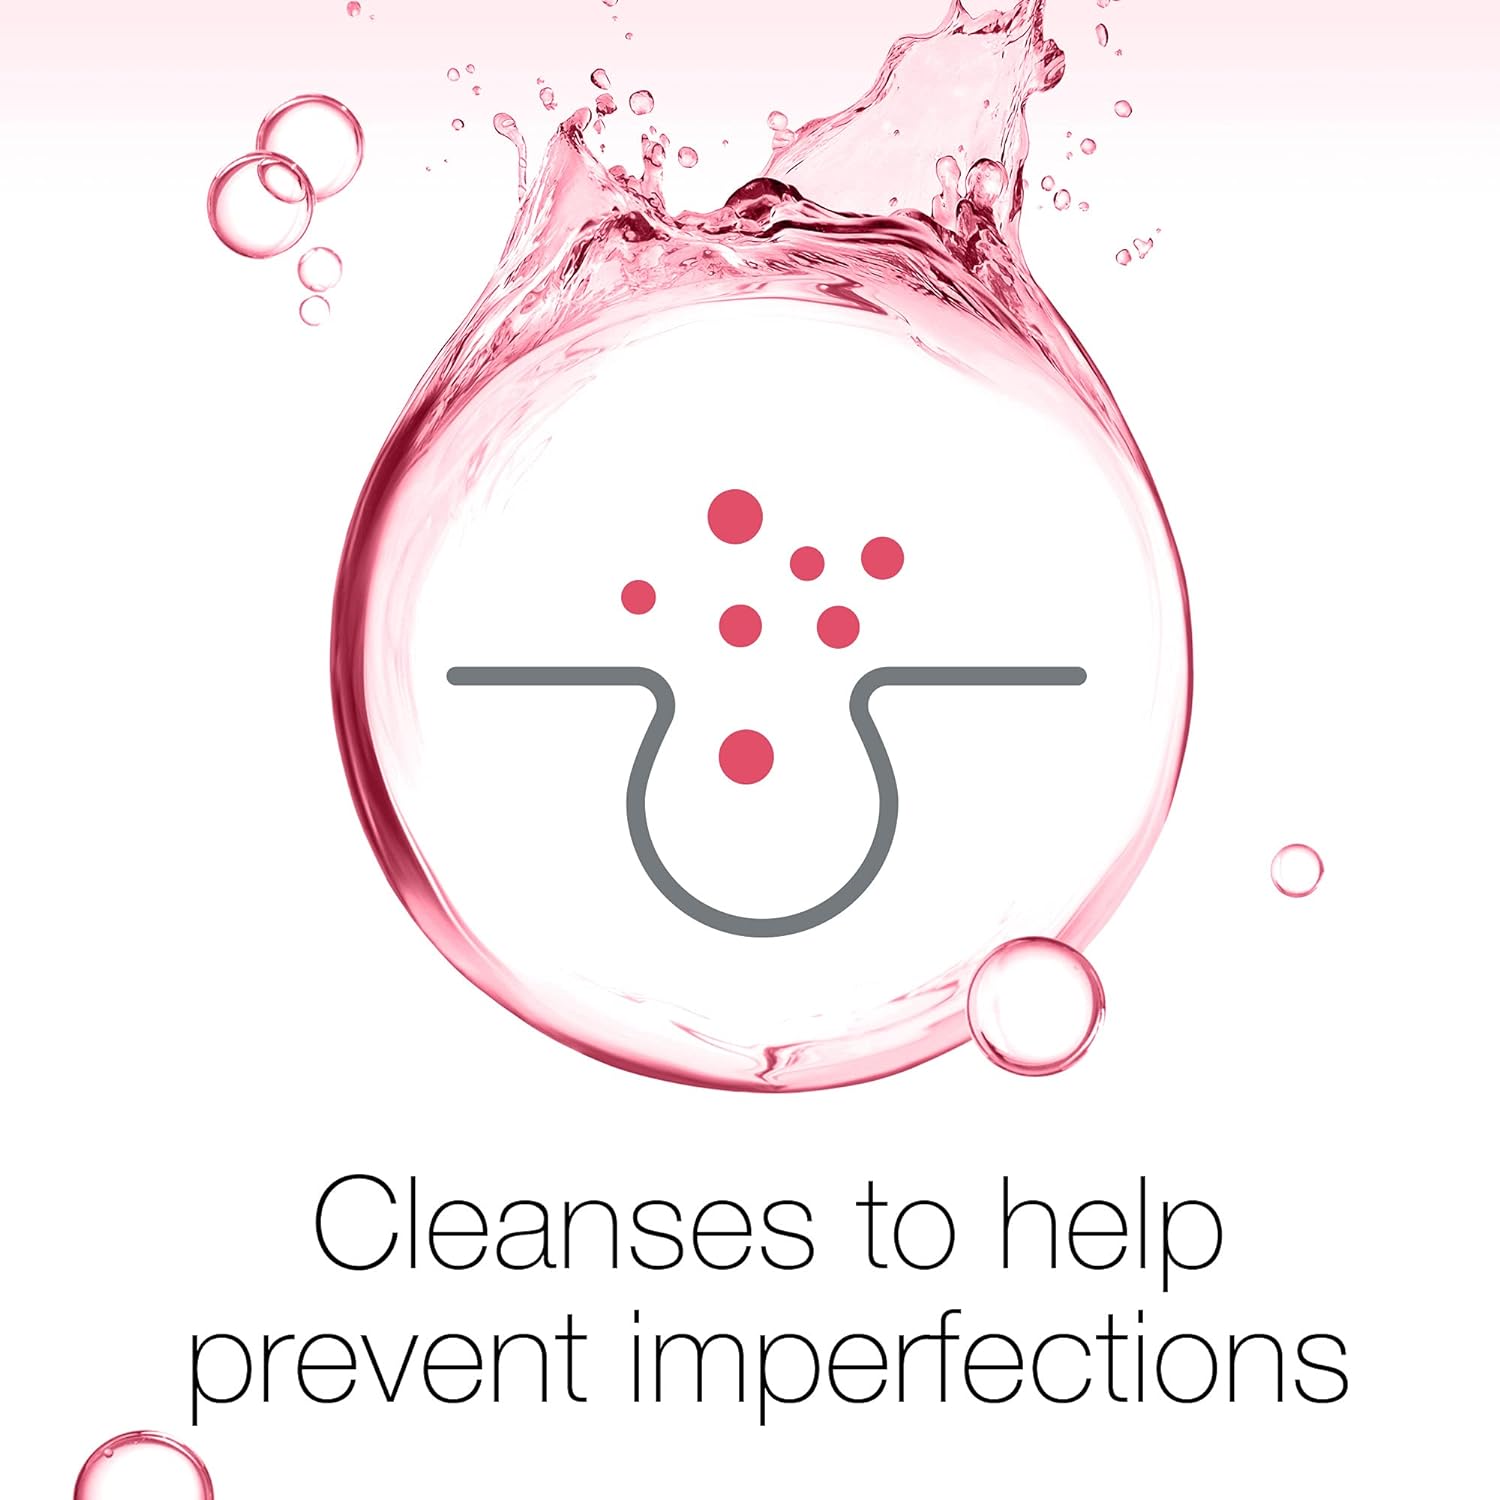 Neutrogena, Fresh & Clear Facial Wash, Pink Grapefruit & Vitamin C, 200ml